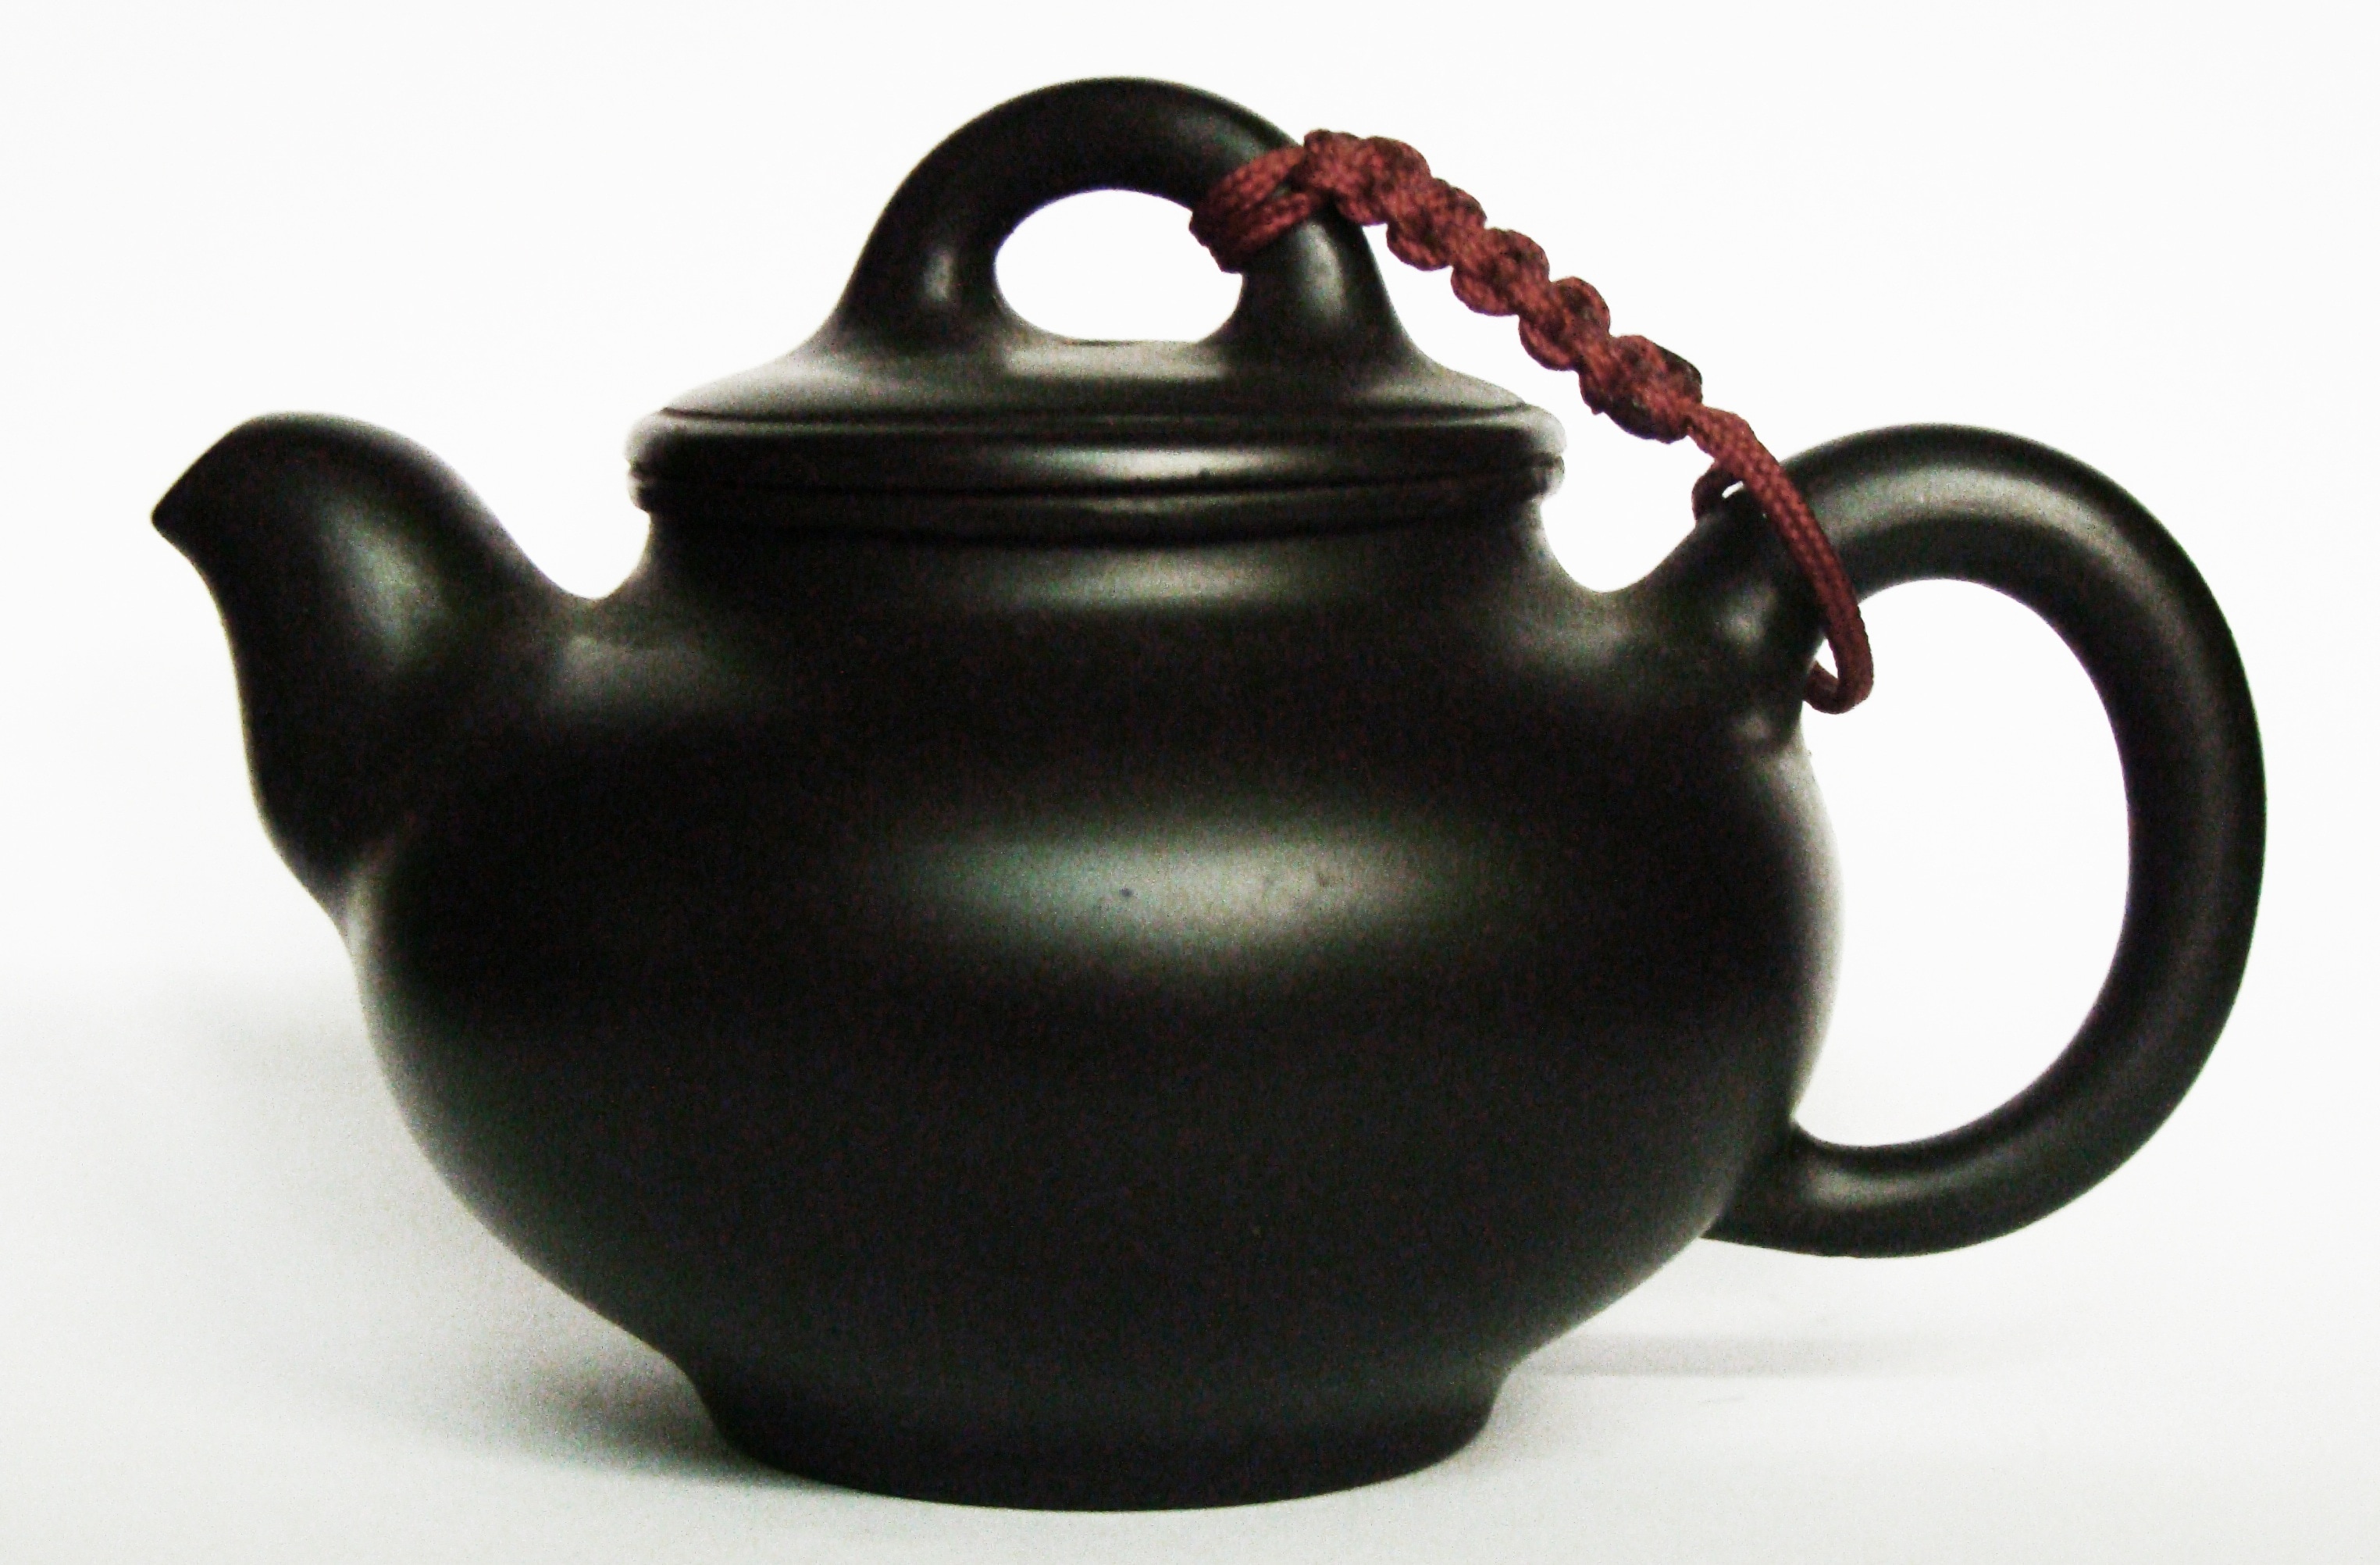 Чайники для церемонии. Чайник для чайной церемонии. Традиционный китайский чайник. Чай в чайнике. Заварочный чайник для чайной церемонии.